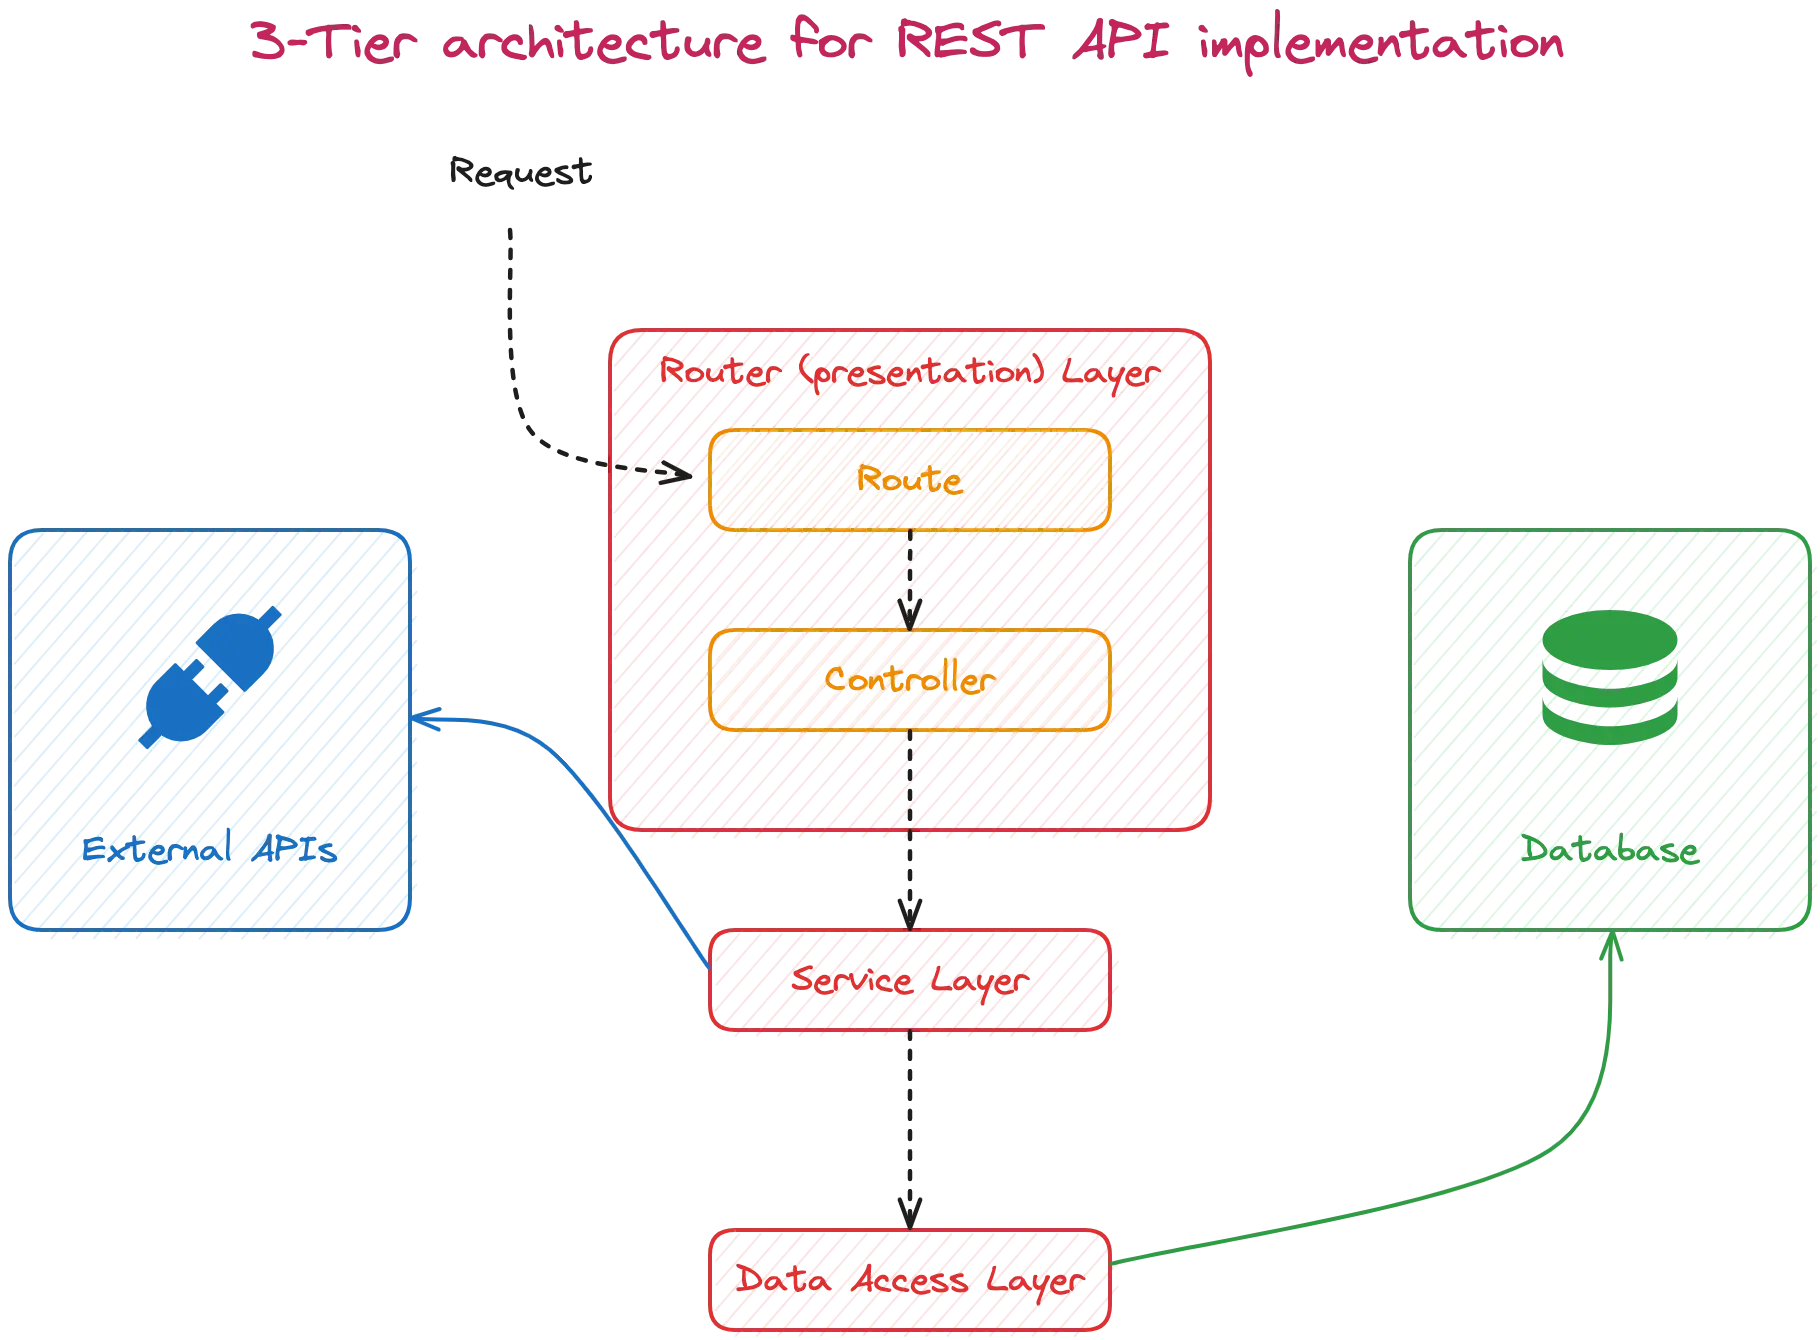 3-tier architecture for REST API implementation